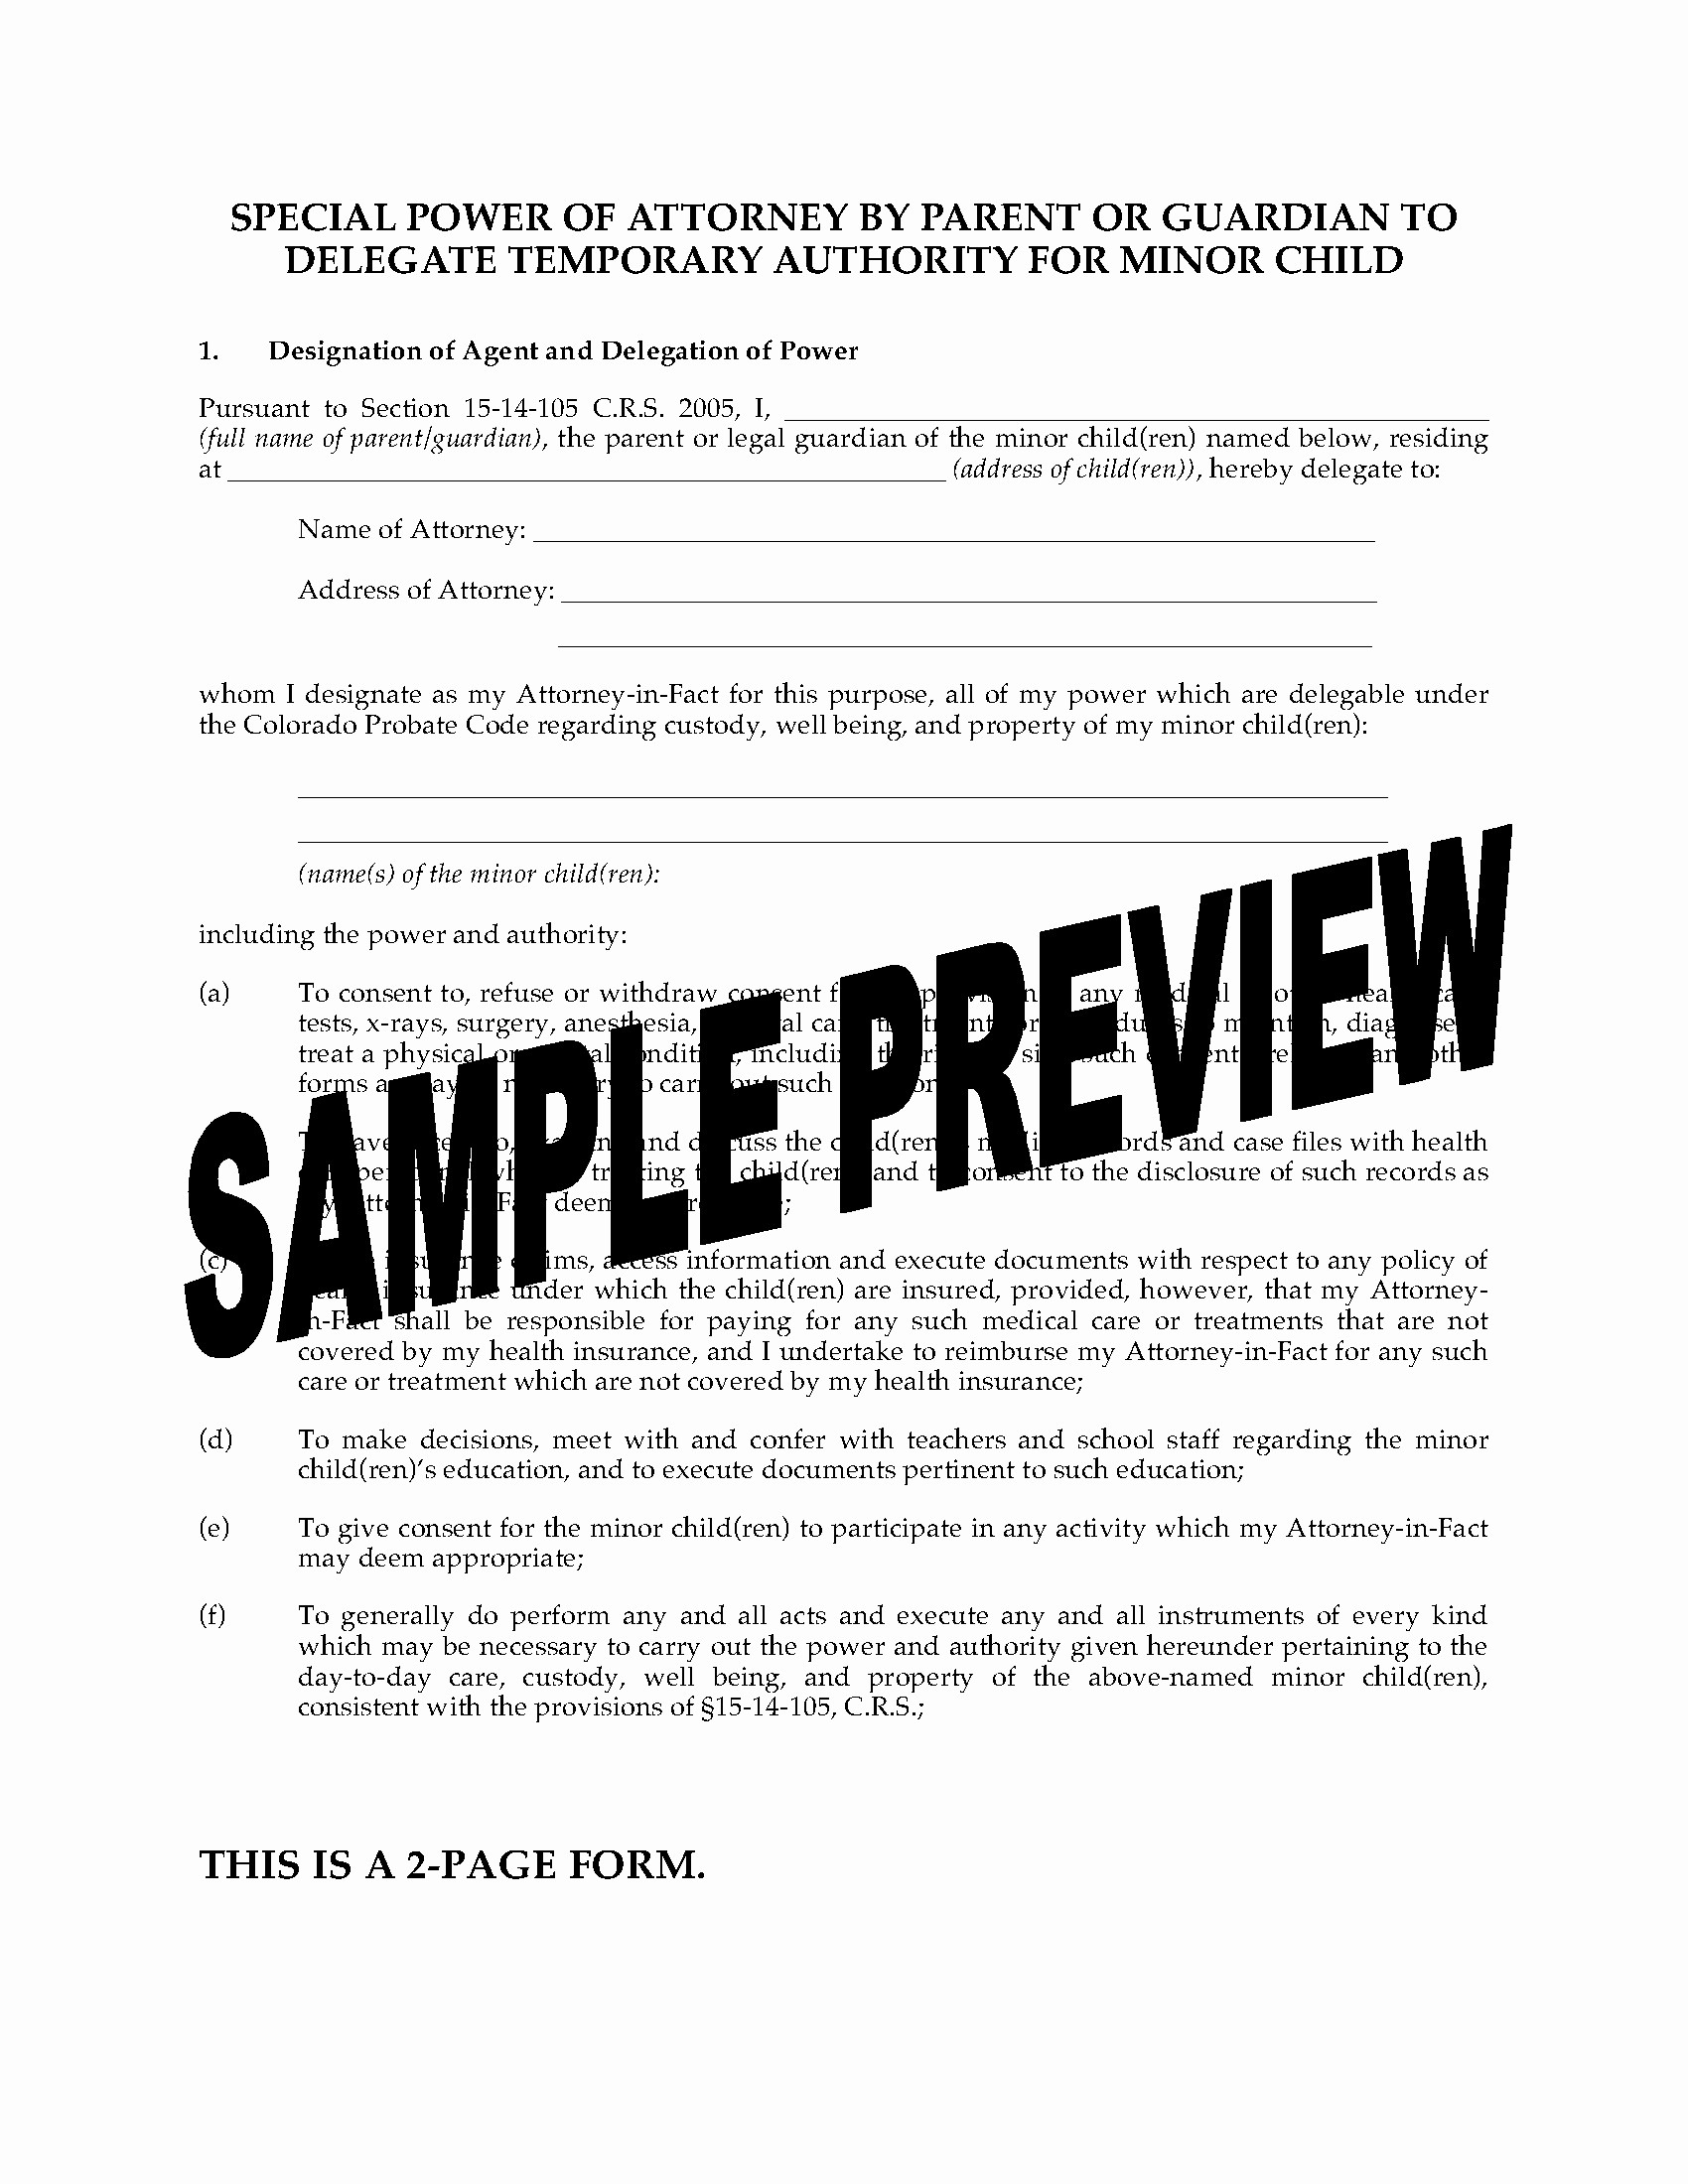 Adopt 200 Form Fresh Uniform Statutory Power Attorney Califor On Document